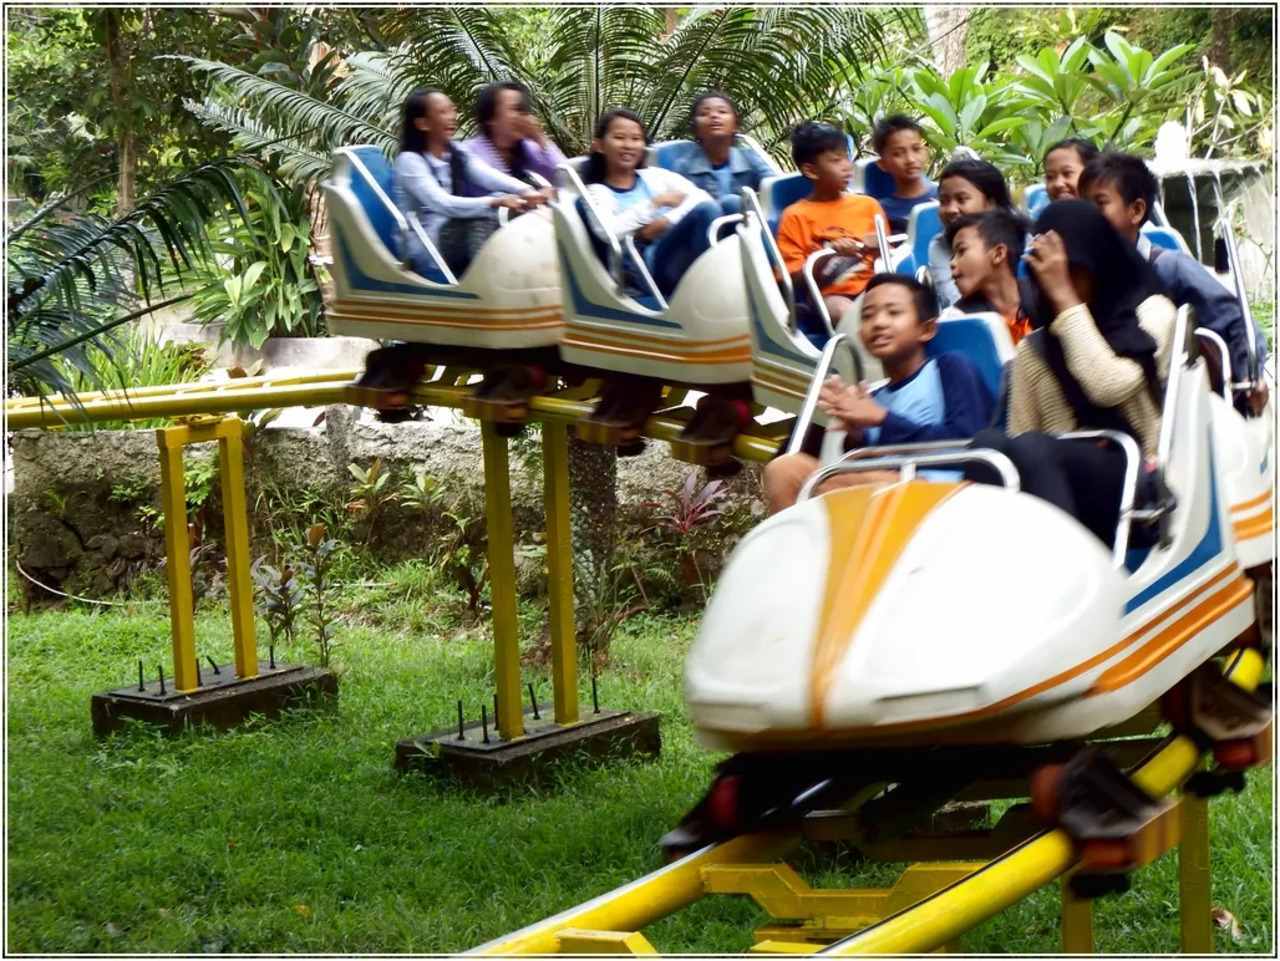 wahana non air roller coaster mini